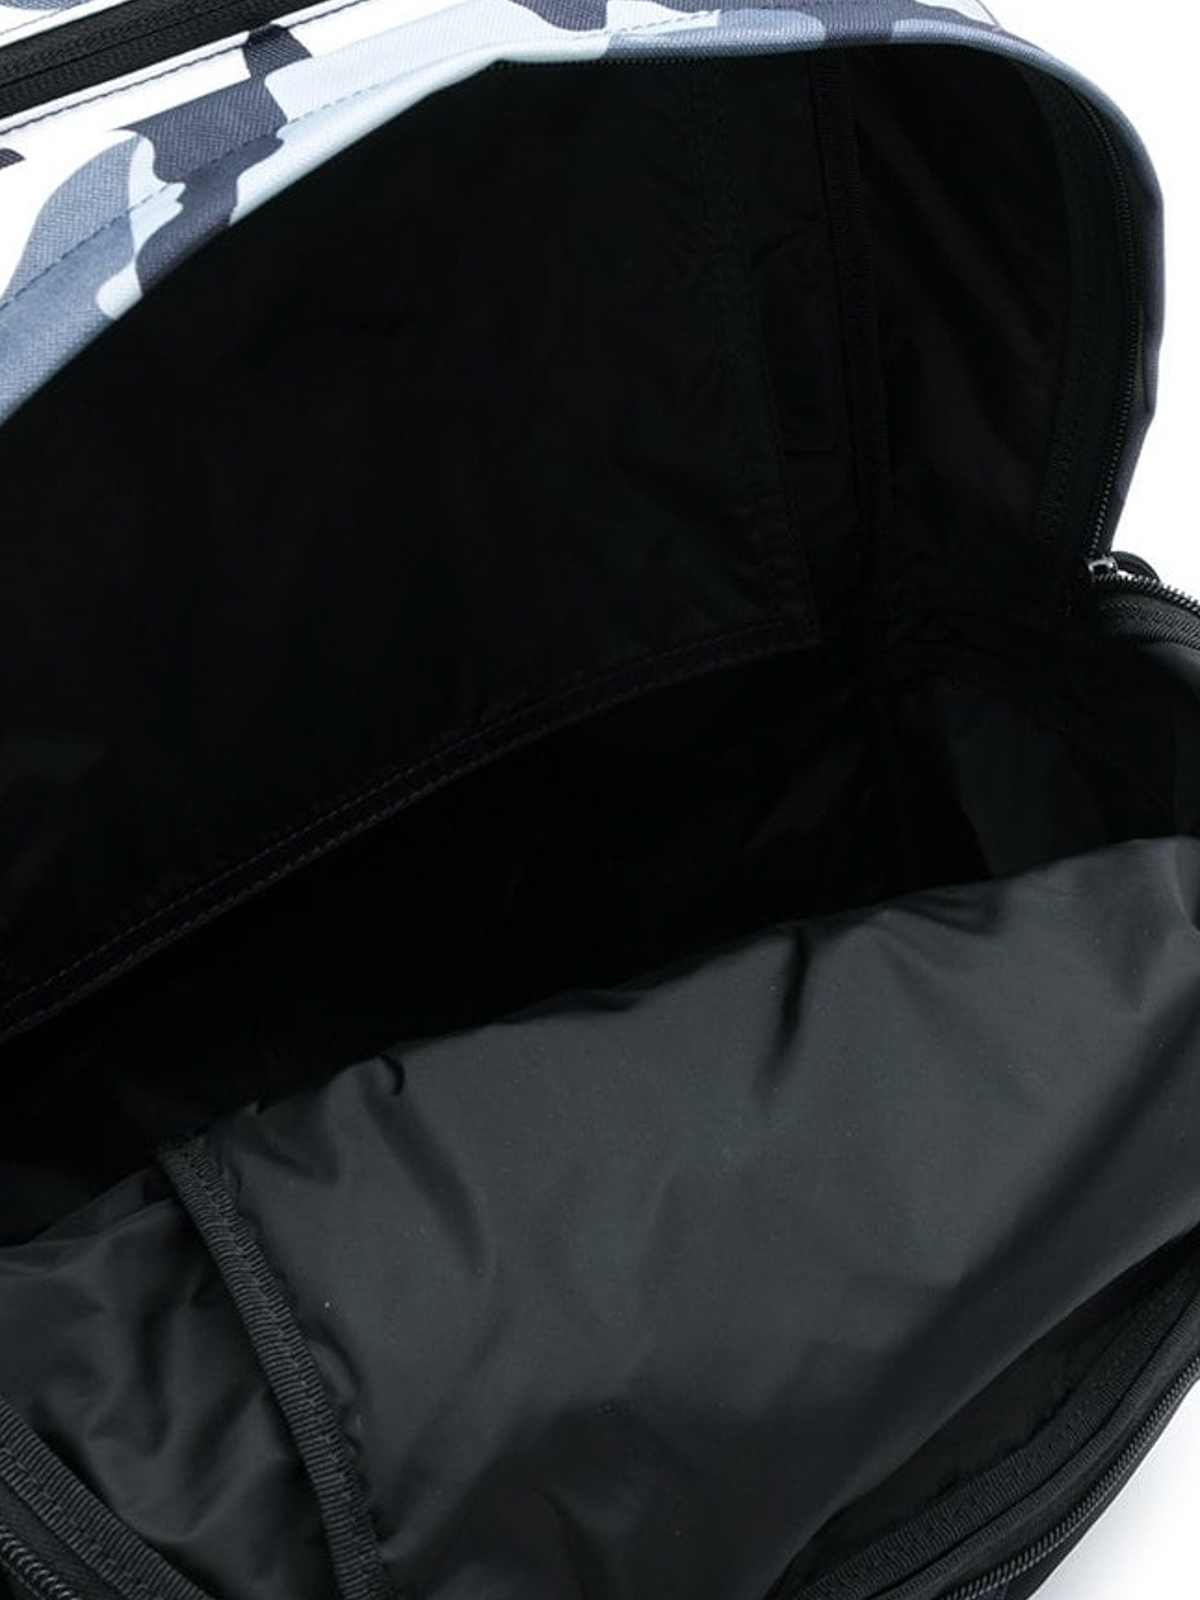 Backpacks Valentino Garavani - Bounce iconic camo print backpack -  QY2B0694CXK1R5